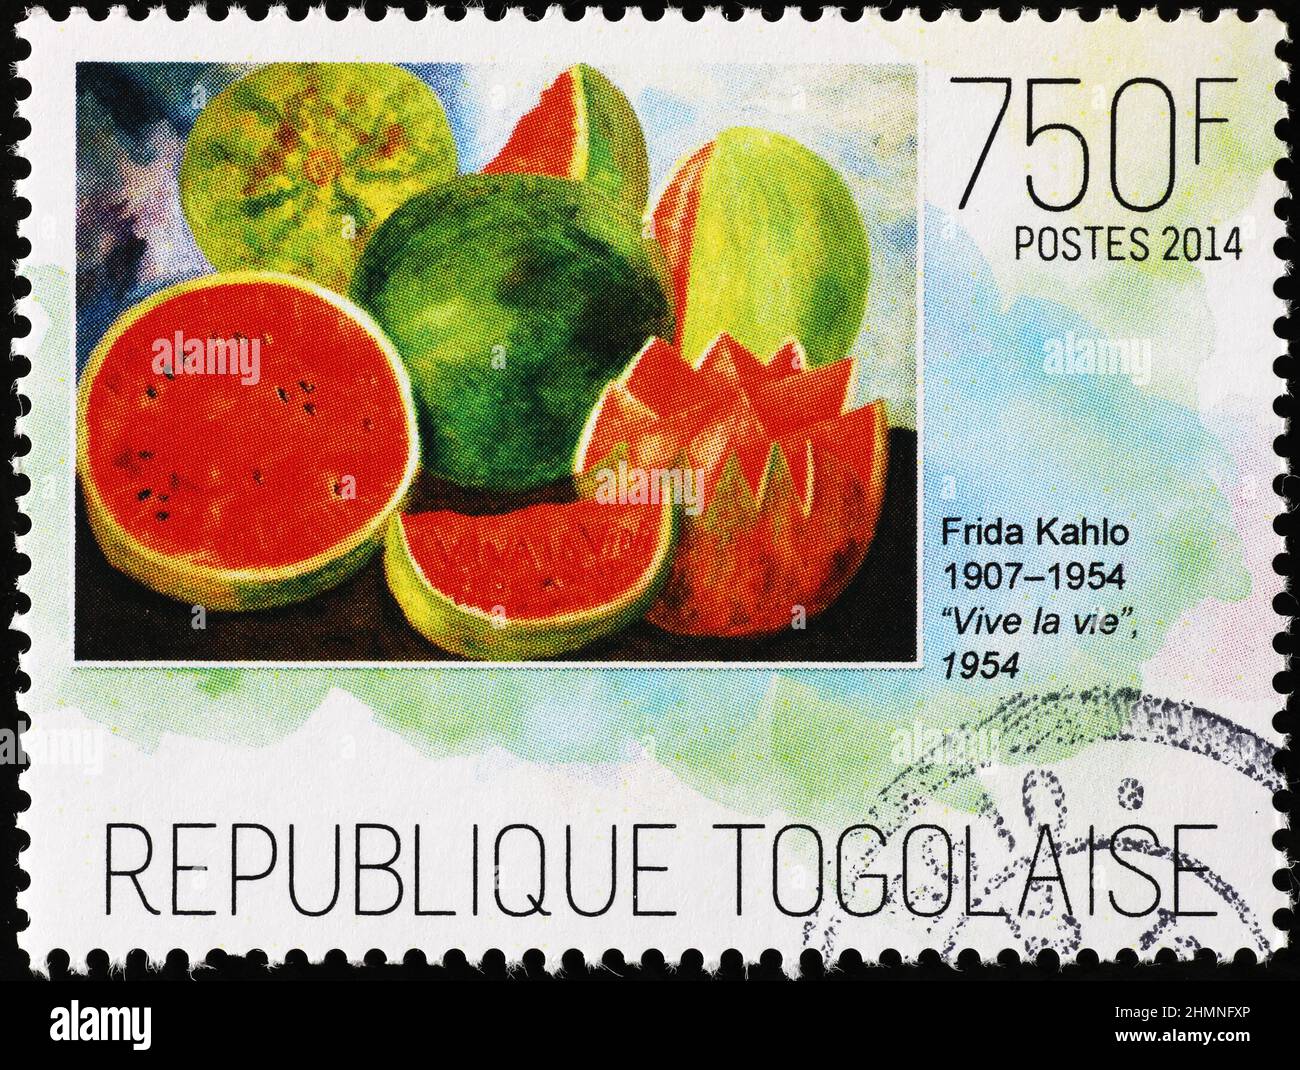 Viva la vida by Frida Kahlo on african stamp Stock Photo